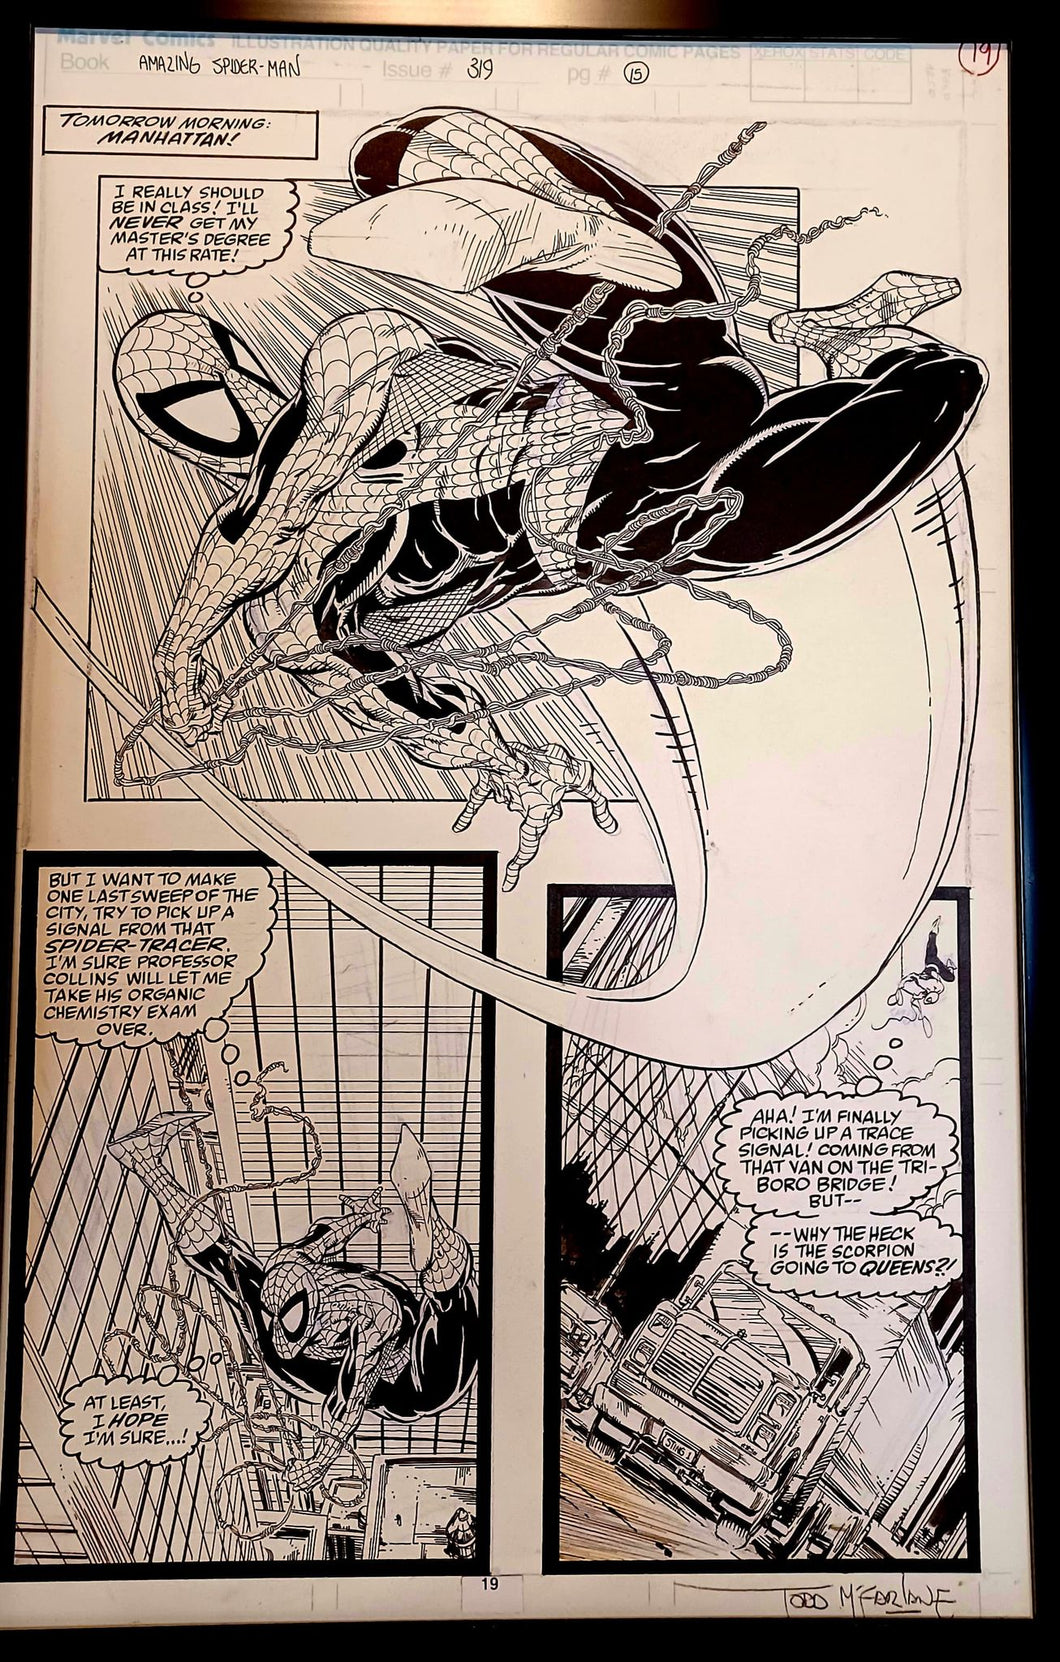 Amazing Spider-Man #319 pg. 15 by Todd McFarlane 11x17 FRAMED Original Art Print Comic Poster